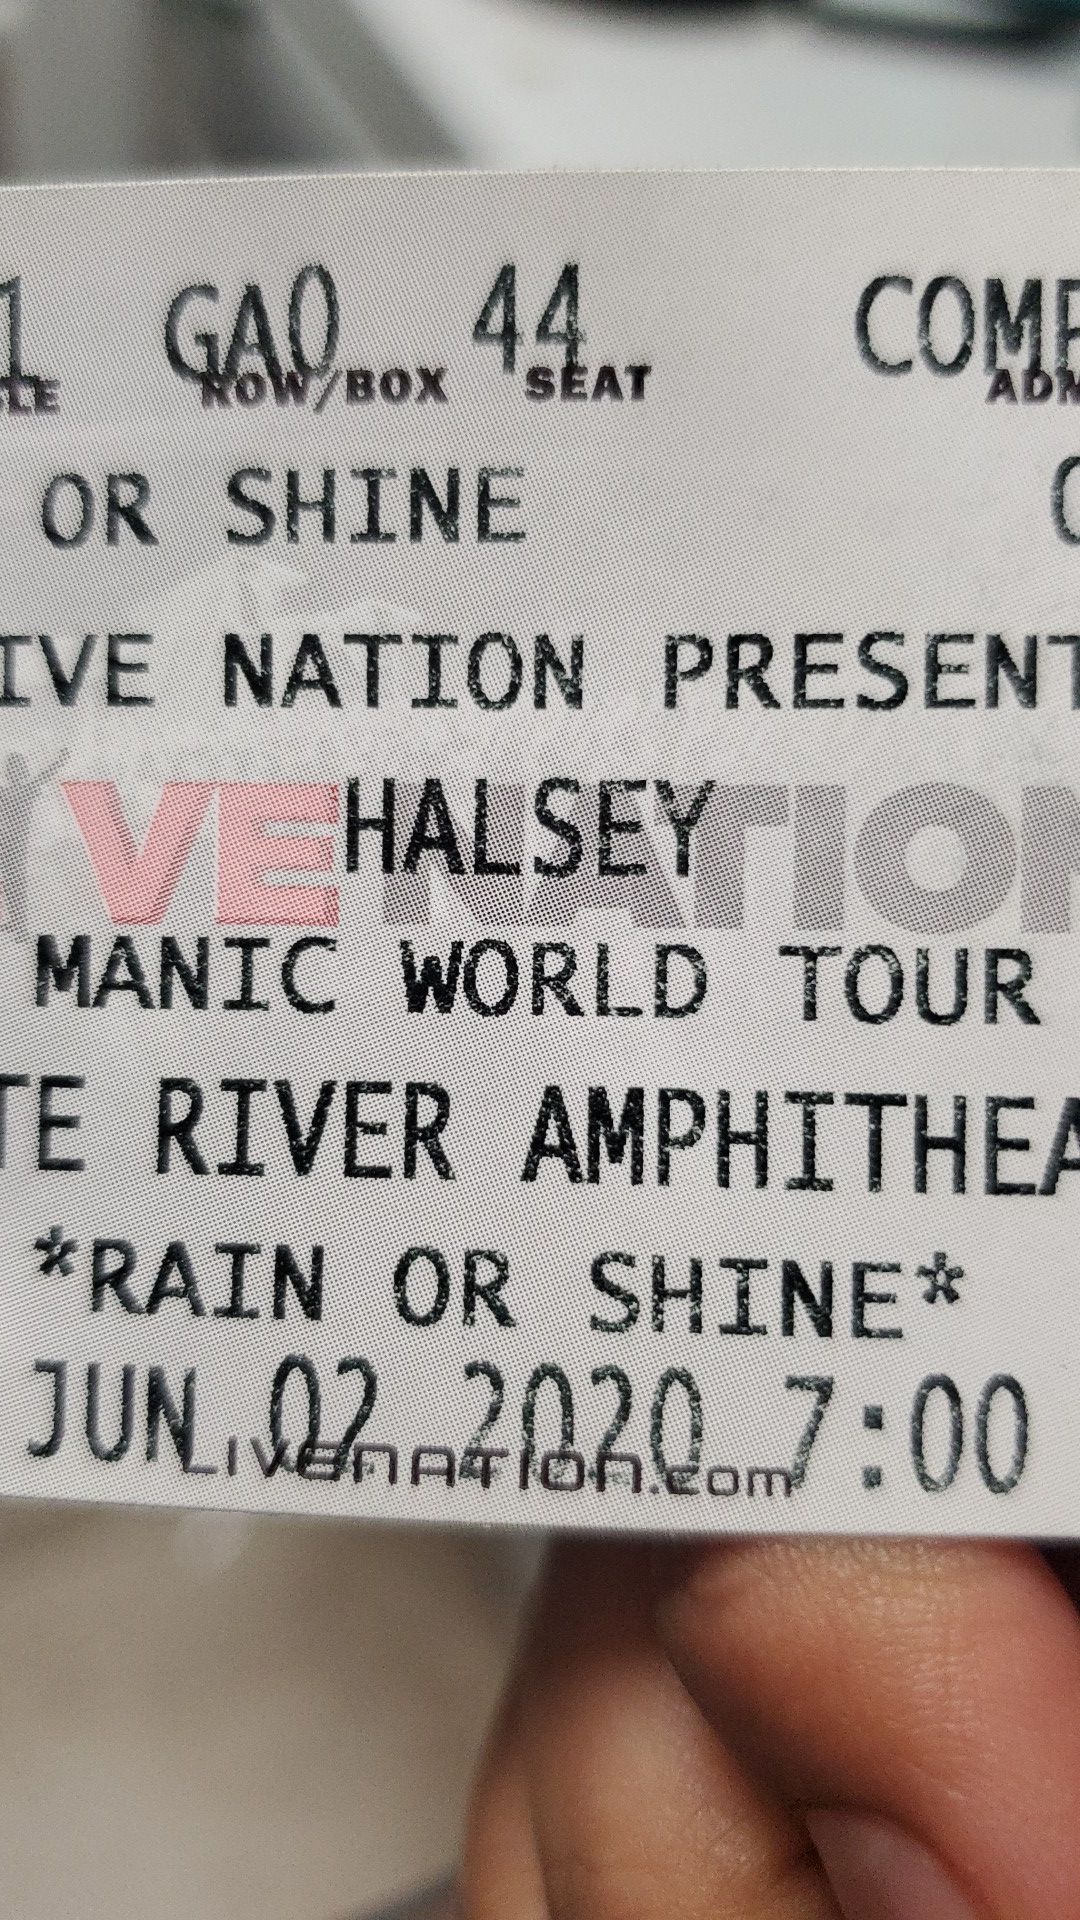 Halsey Manic World Tour tickets